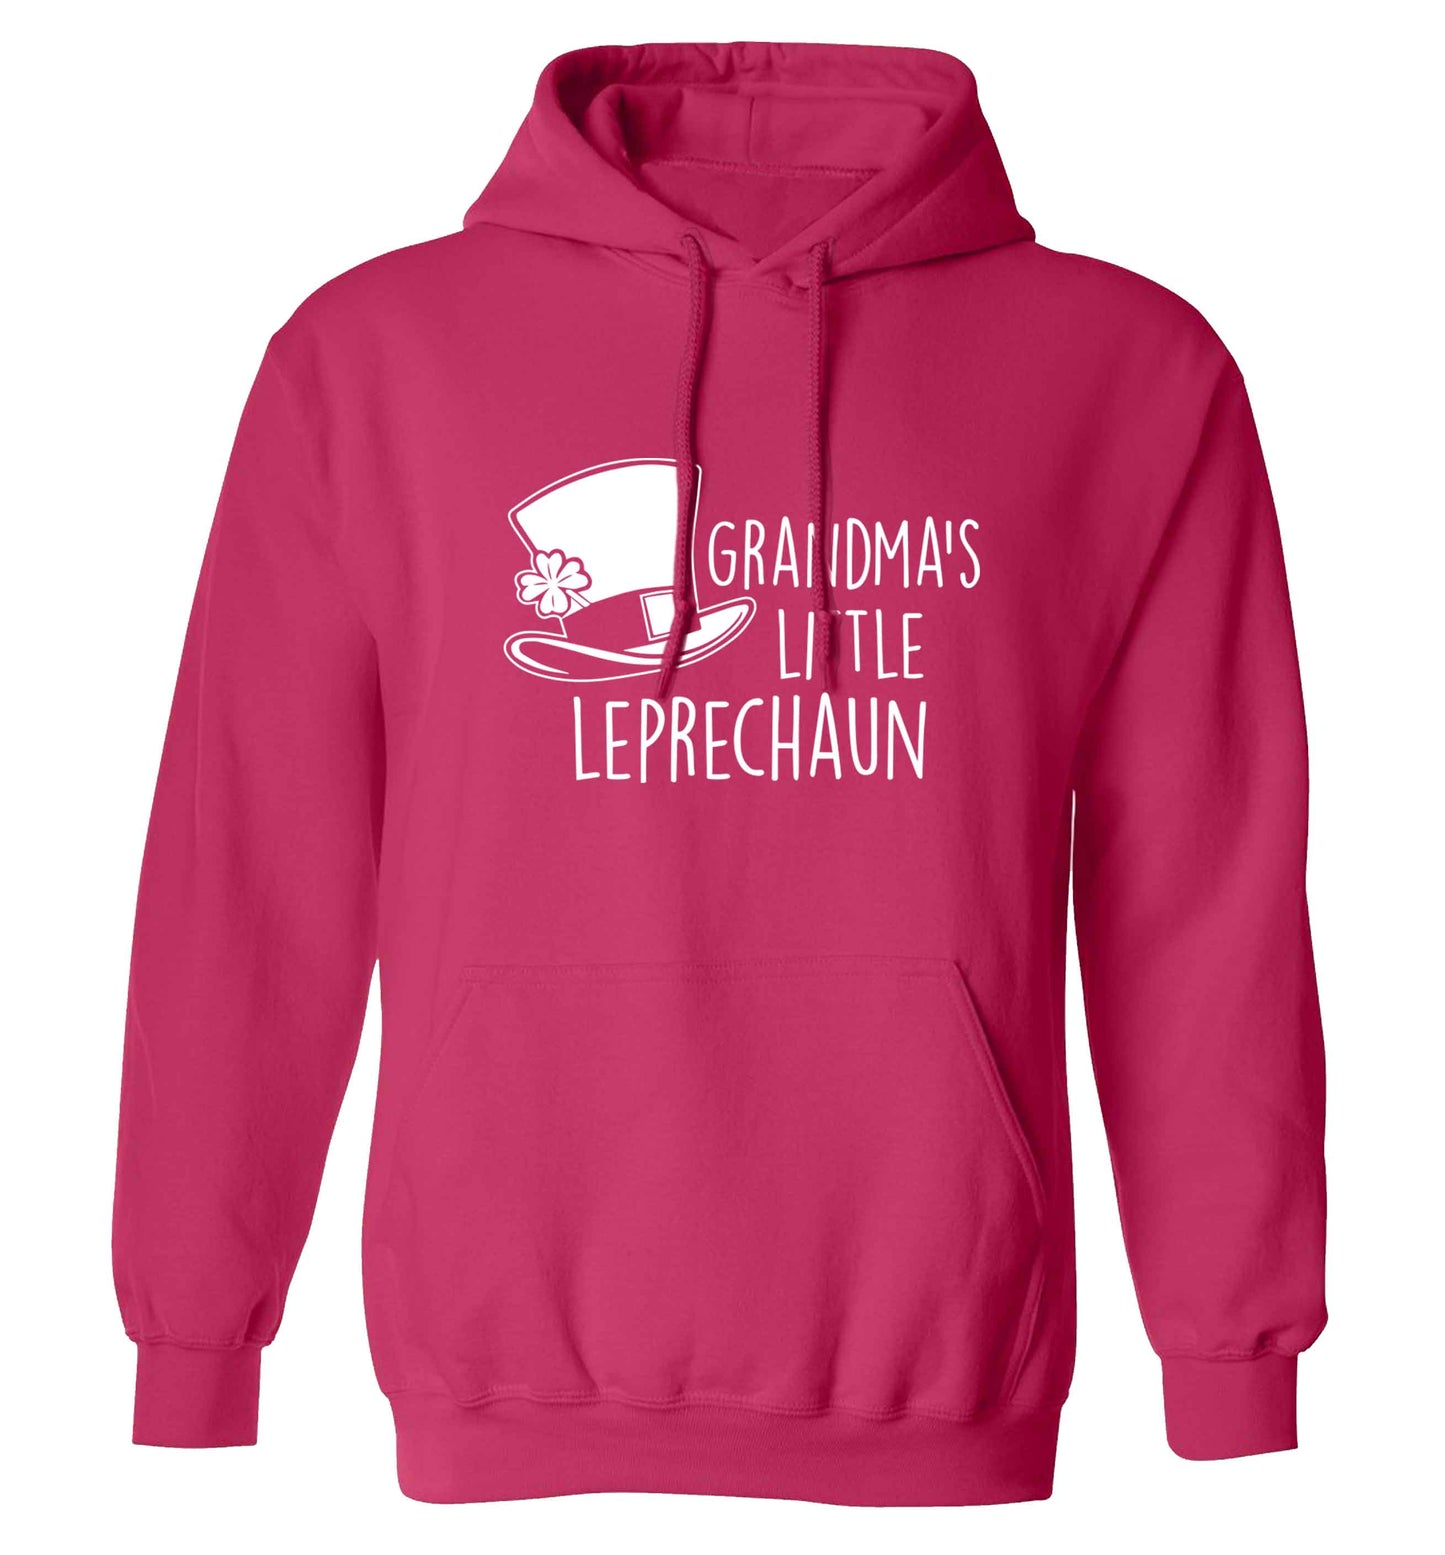 Grandma's little leprechaun adults unisex pink hoodie 2XL